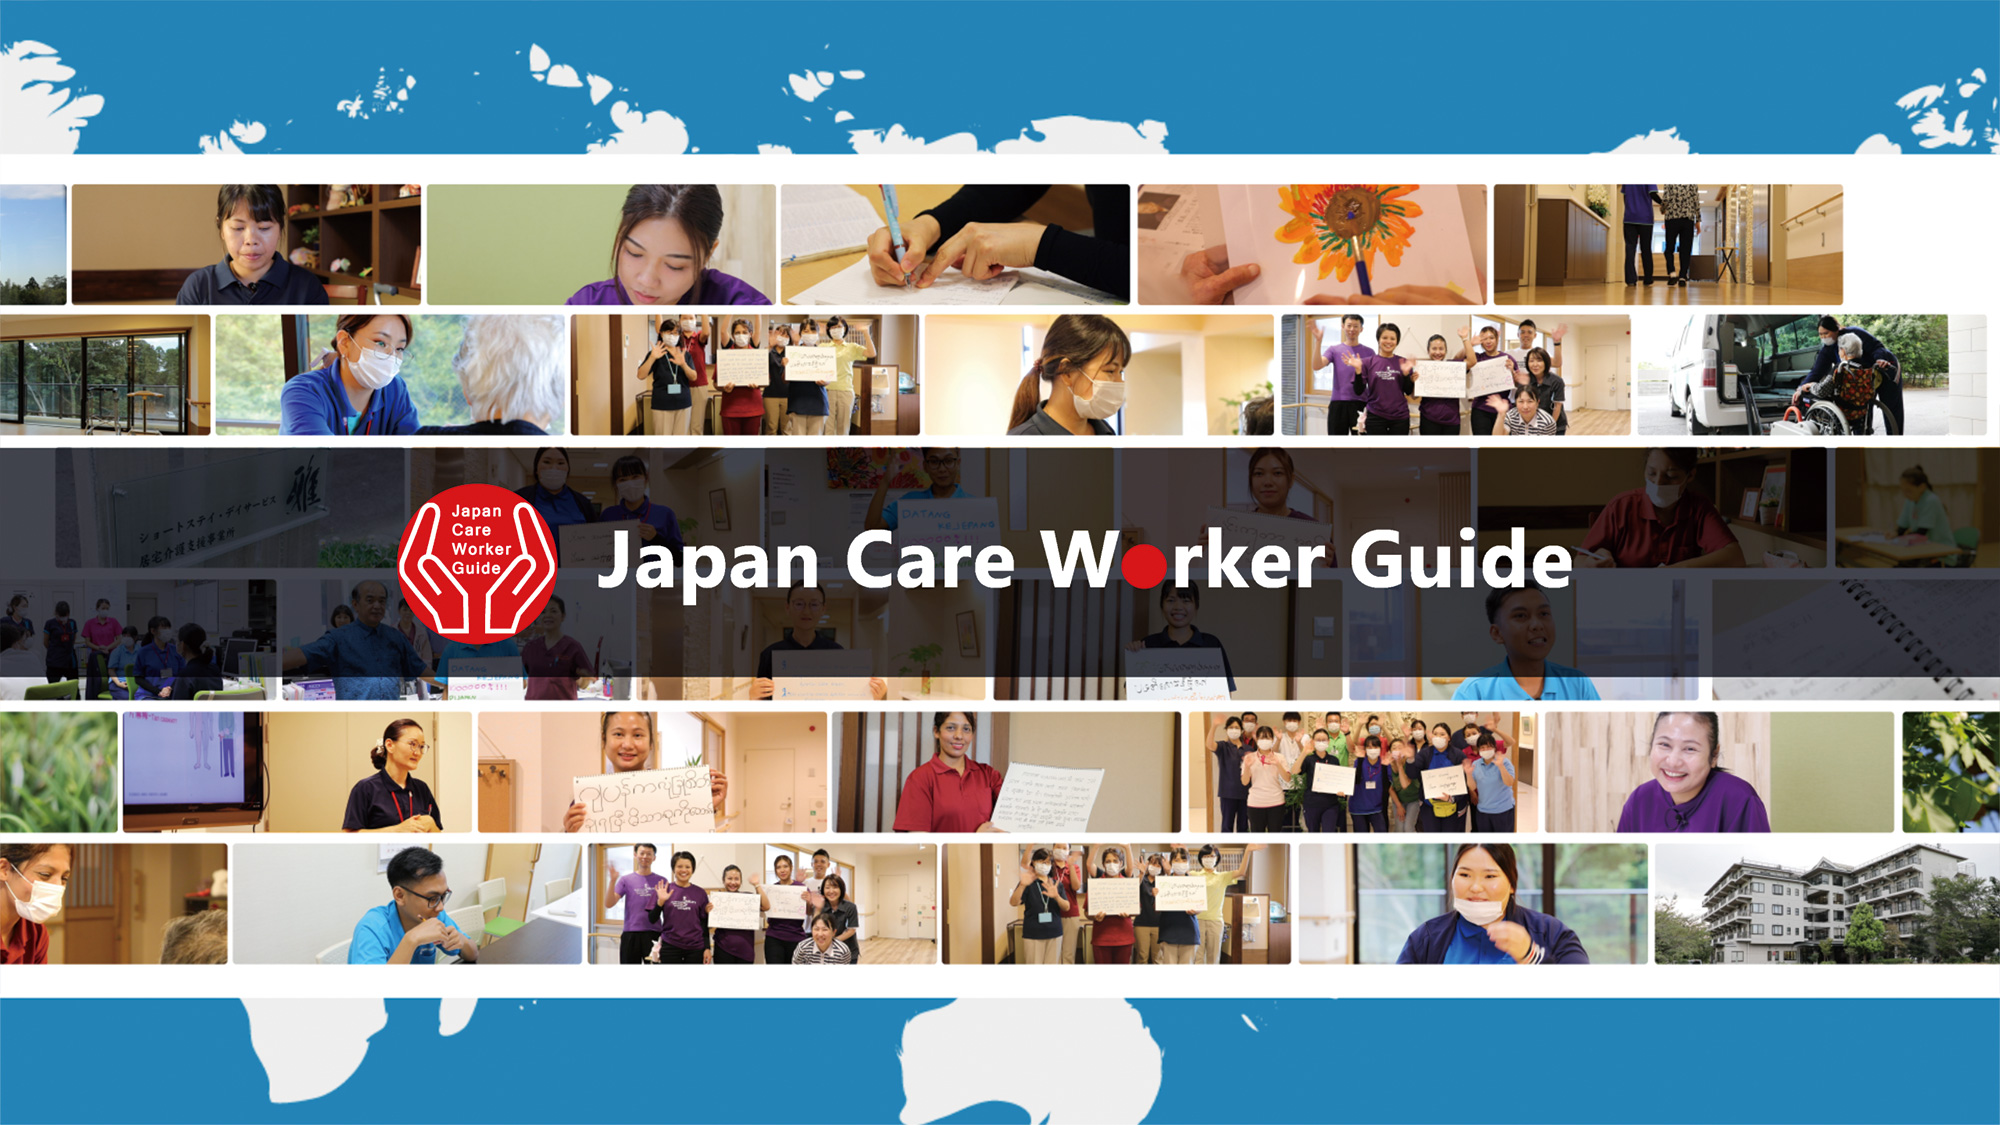 Japan Care Worker Guide2020 セミナーアーカイブ映像公開のお知らせ